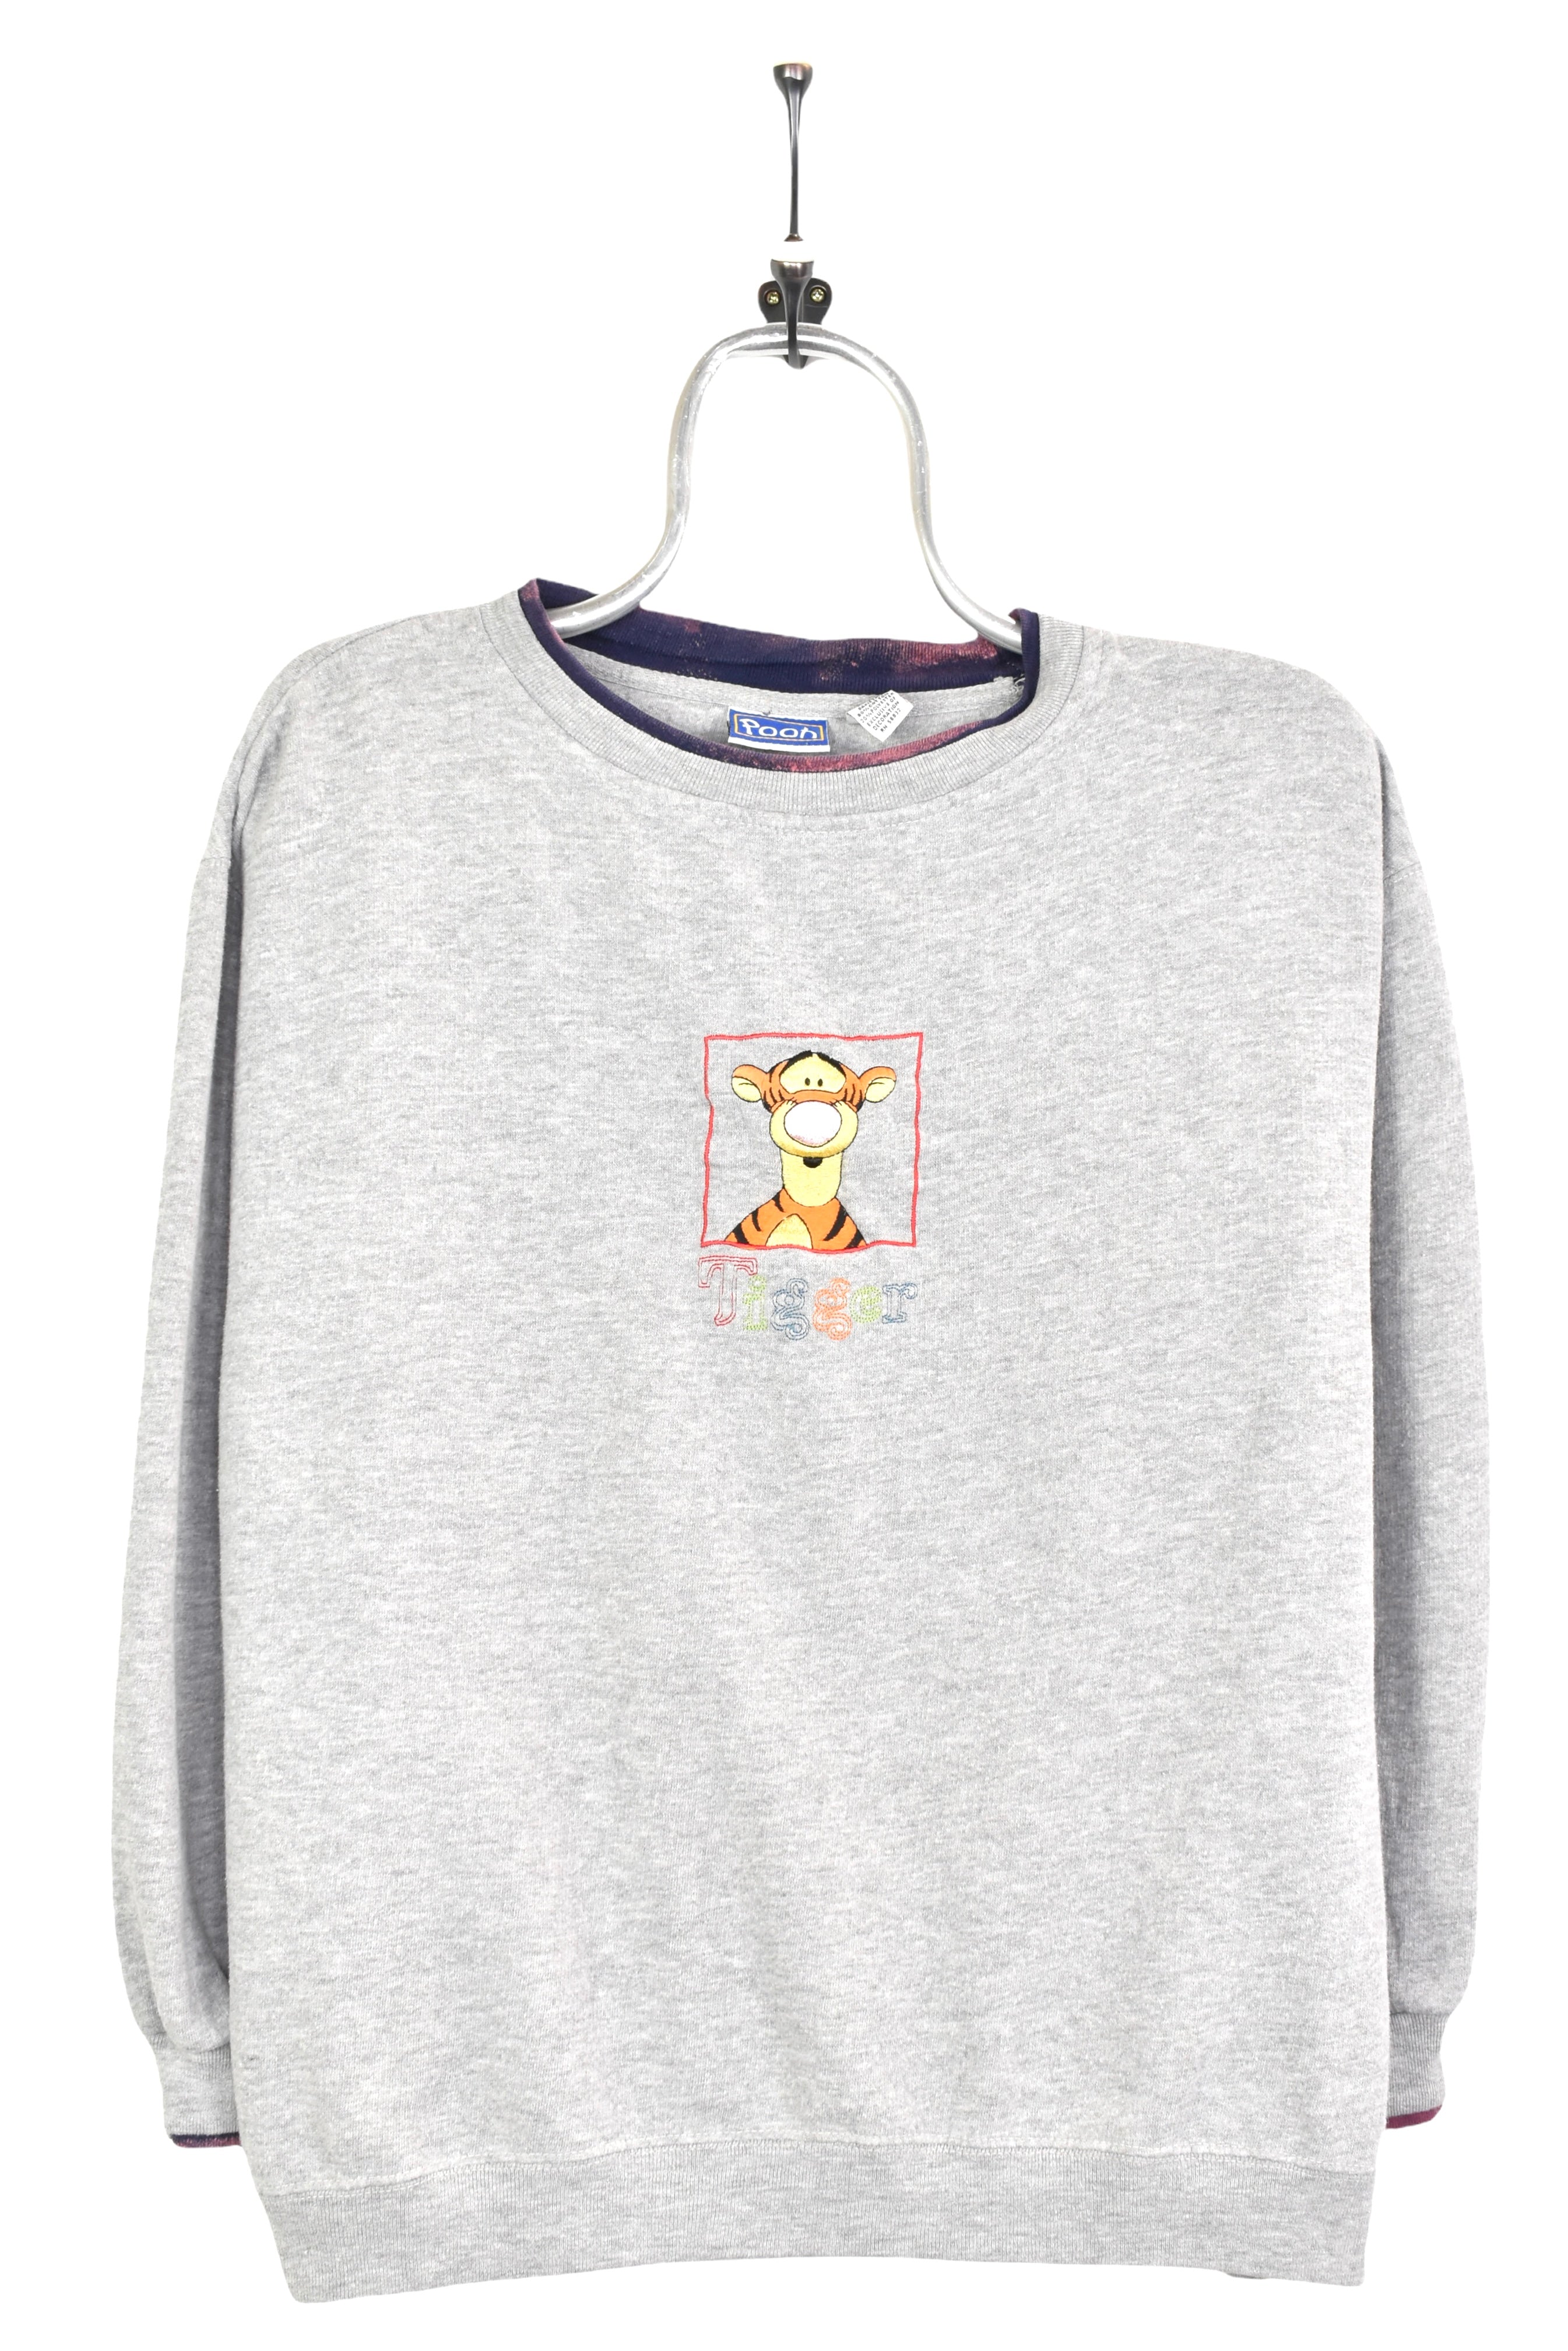 Women's vintage Disney sweatshirt, Tigger cartoon embroidered crewneck - large, grey DISNEY / CARTOON